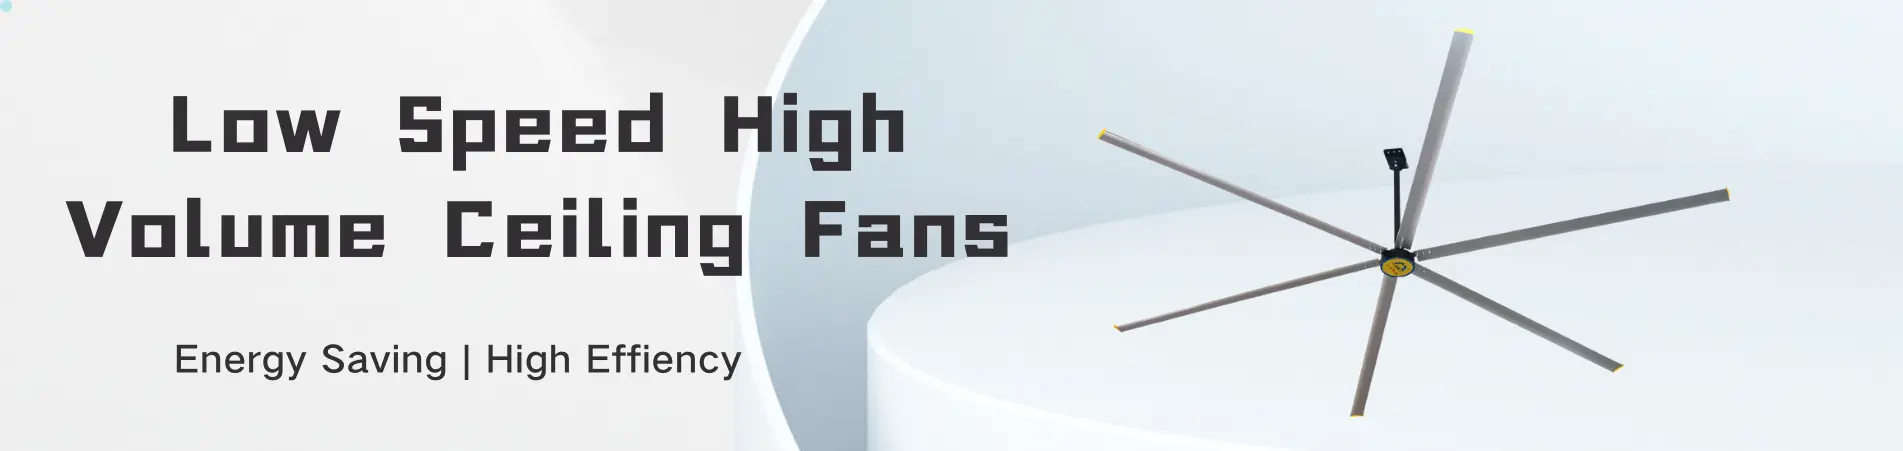 HVLS Industrial Ceiling Fans